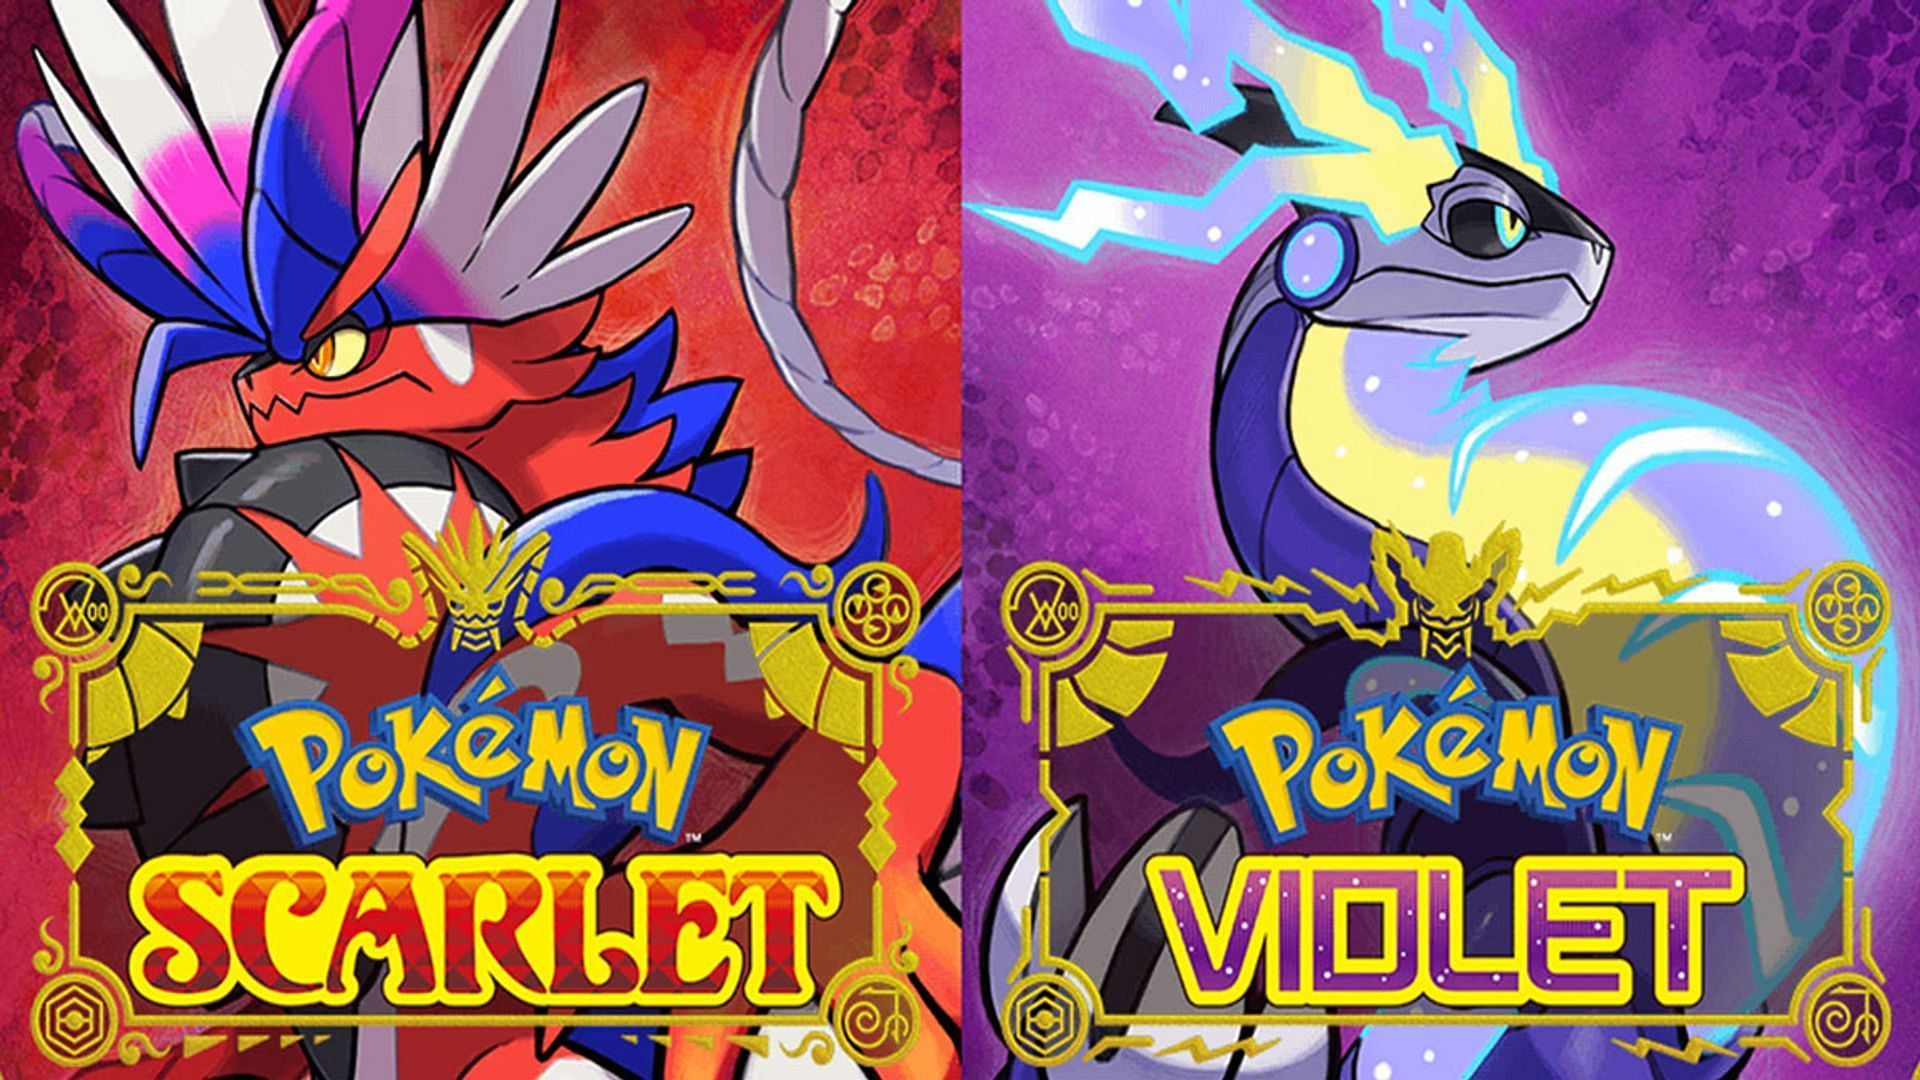 Pokemon Scarlet and Pokemon Violet will release soon (Image via The Pokemon Company)